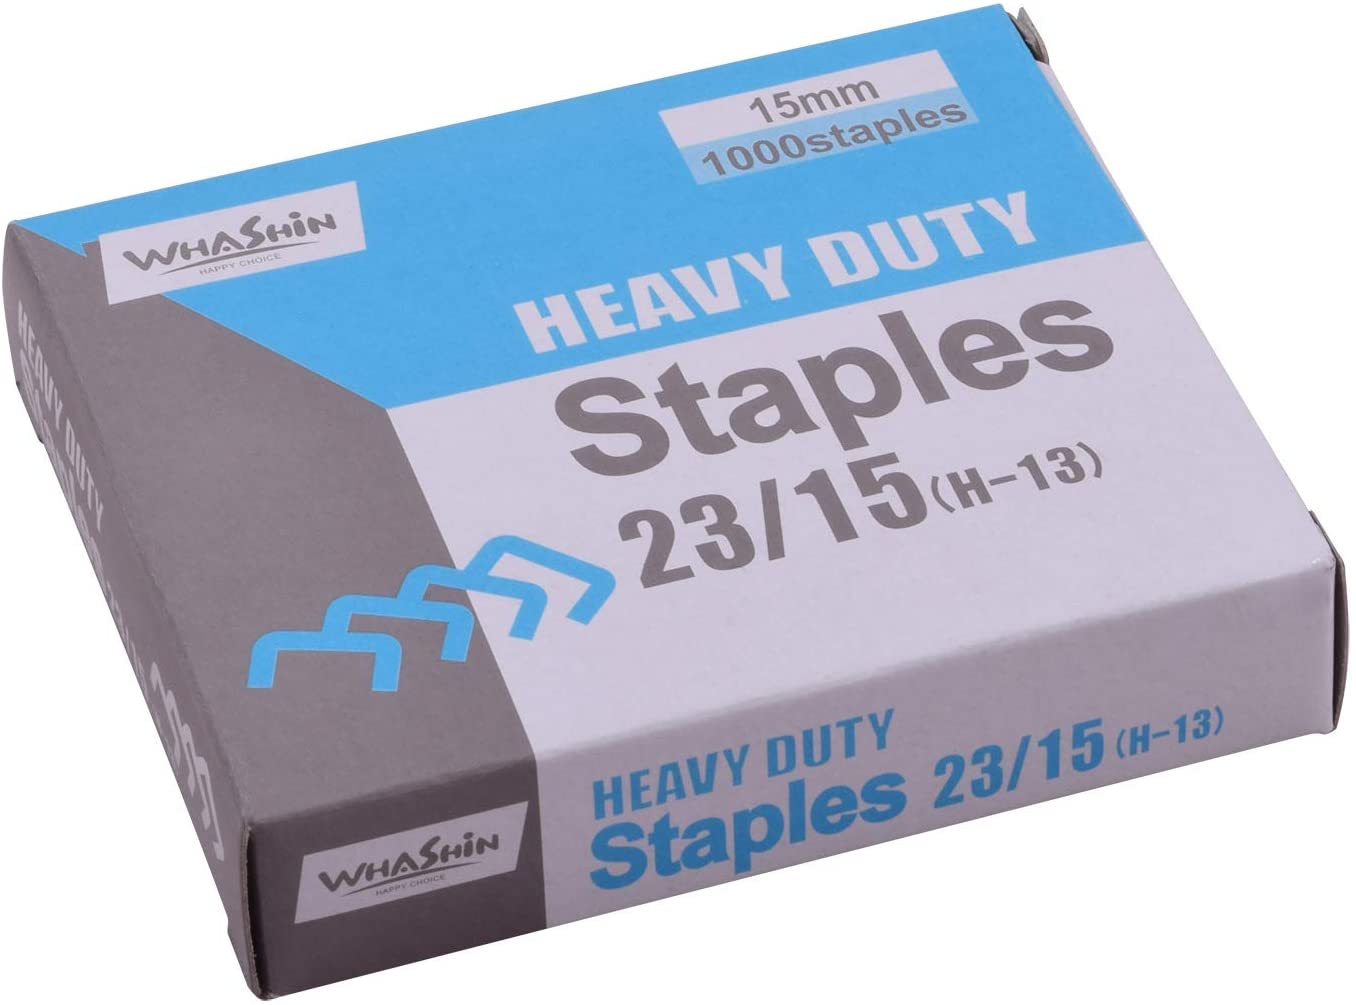 Whashin Heavy Duty Staples 23/15(H-13) 15mm 1000 Staples Pack